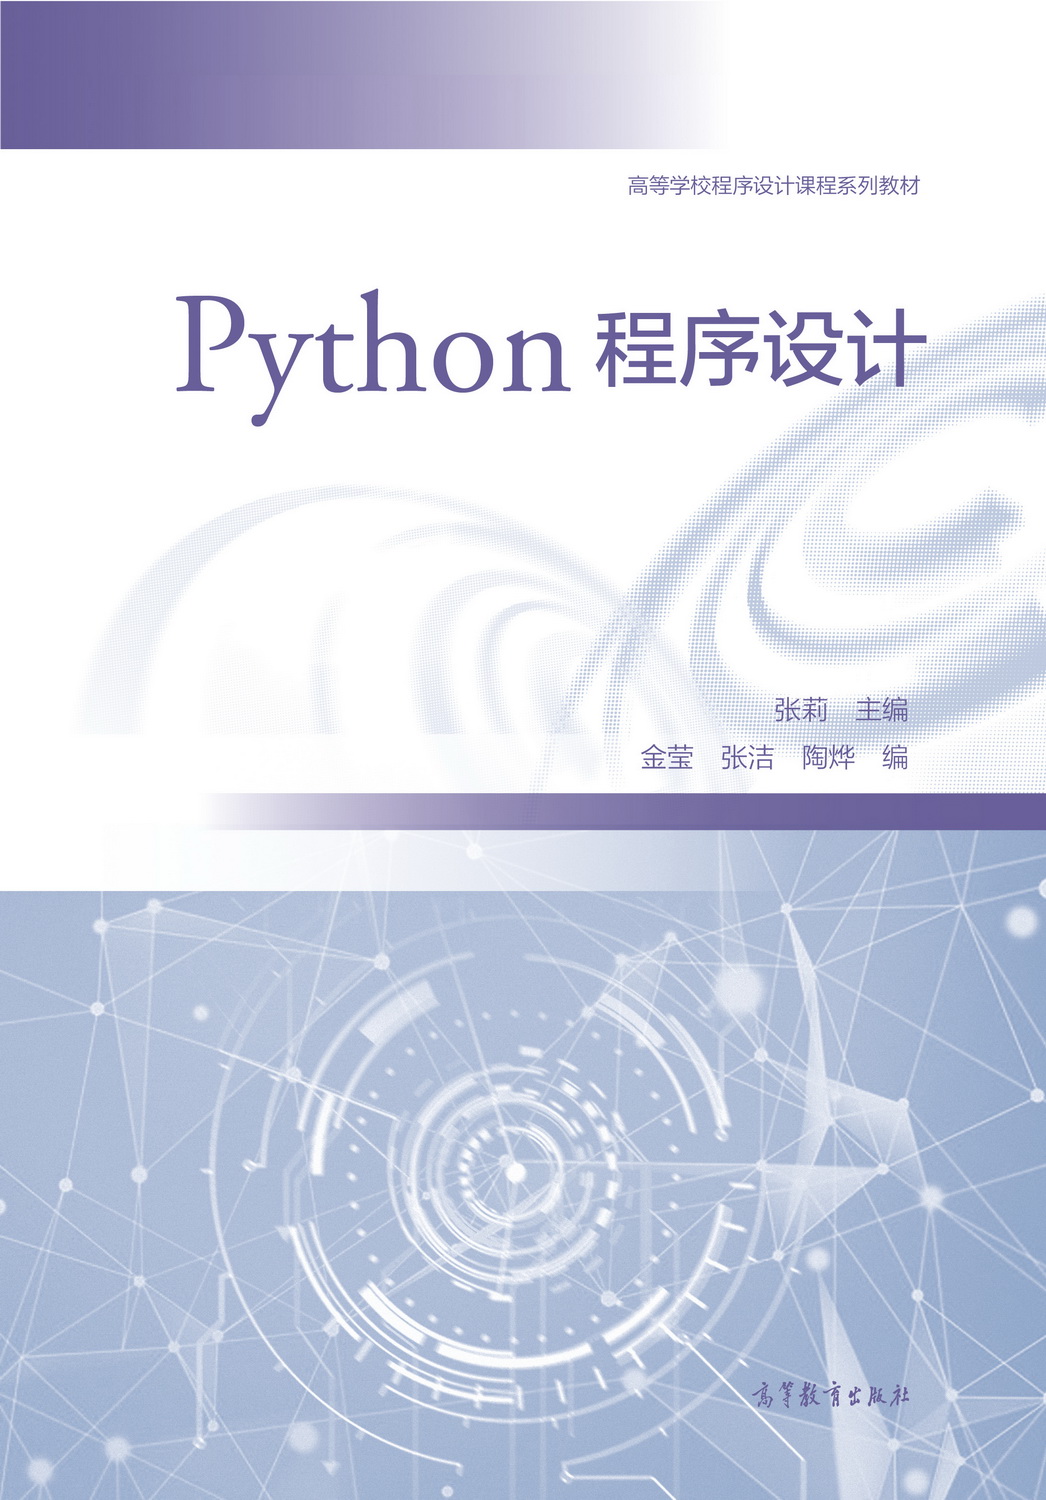 Python程式設計(2019年高等教育出版社出版的書籍)